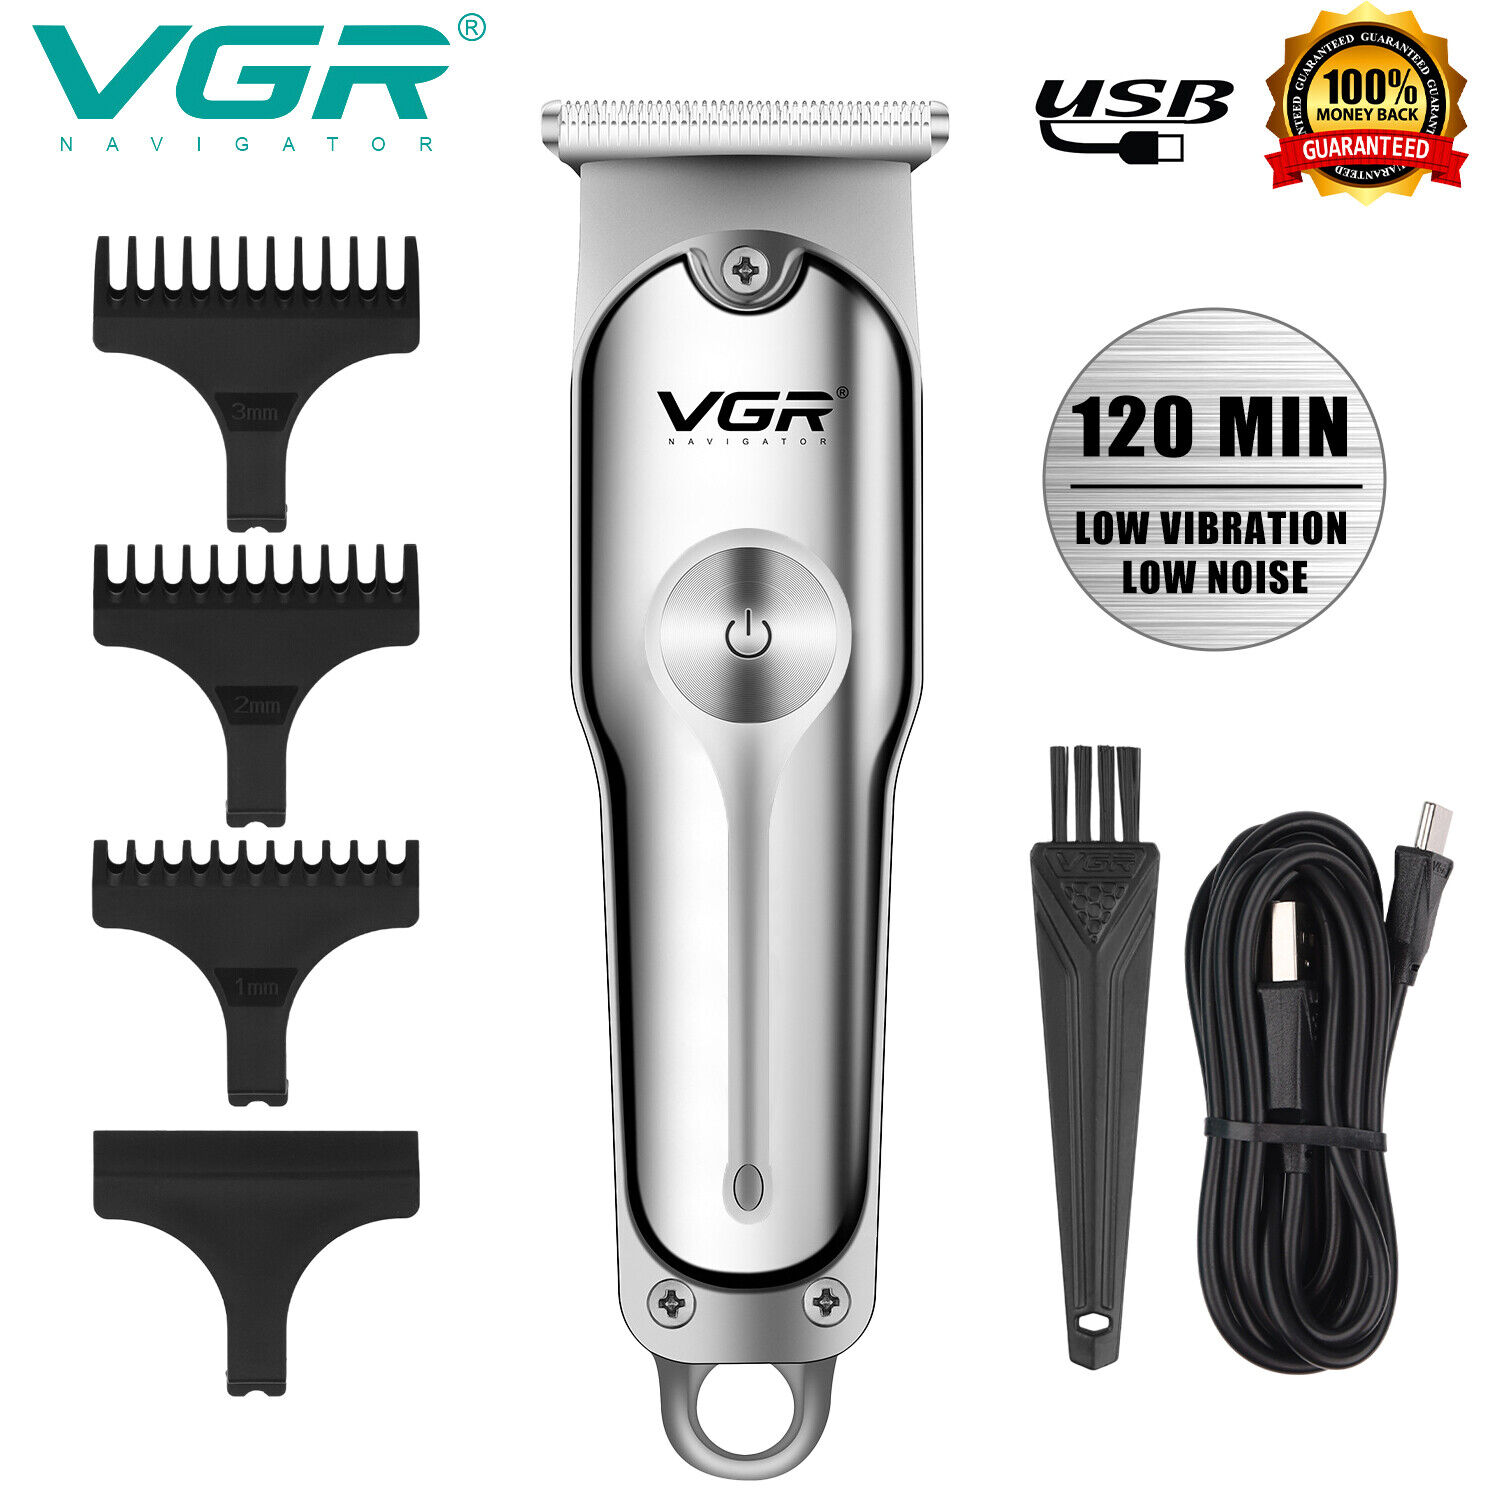 VGR Professional Barber Hair Clippers Cordless Men Beard Trimmer Cutting Machine